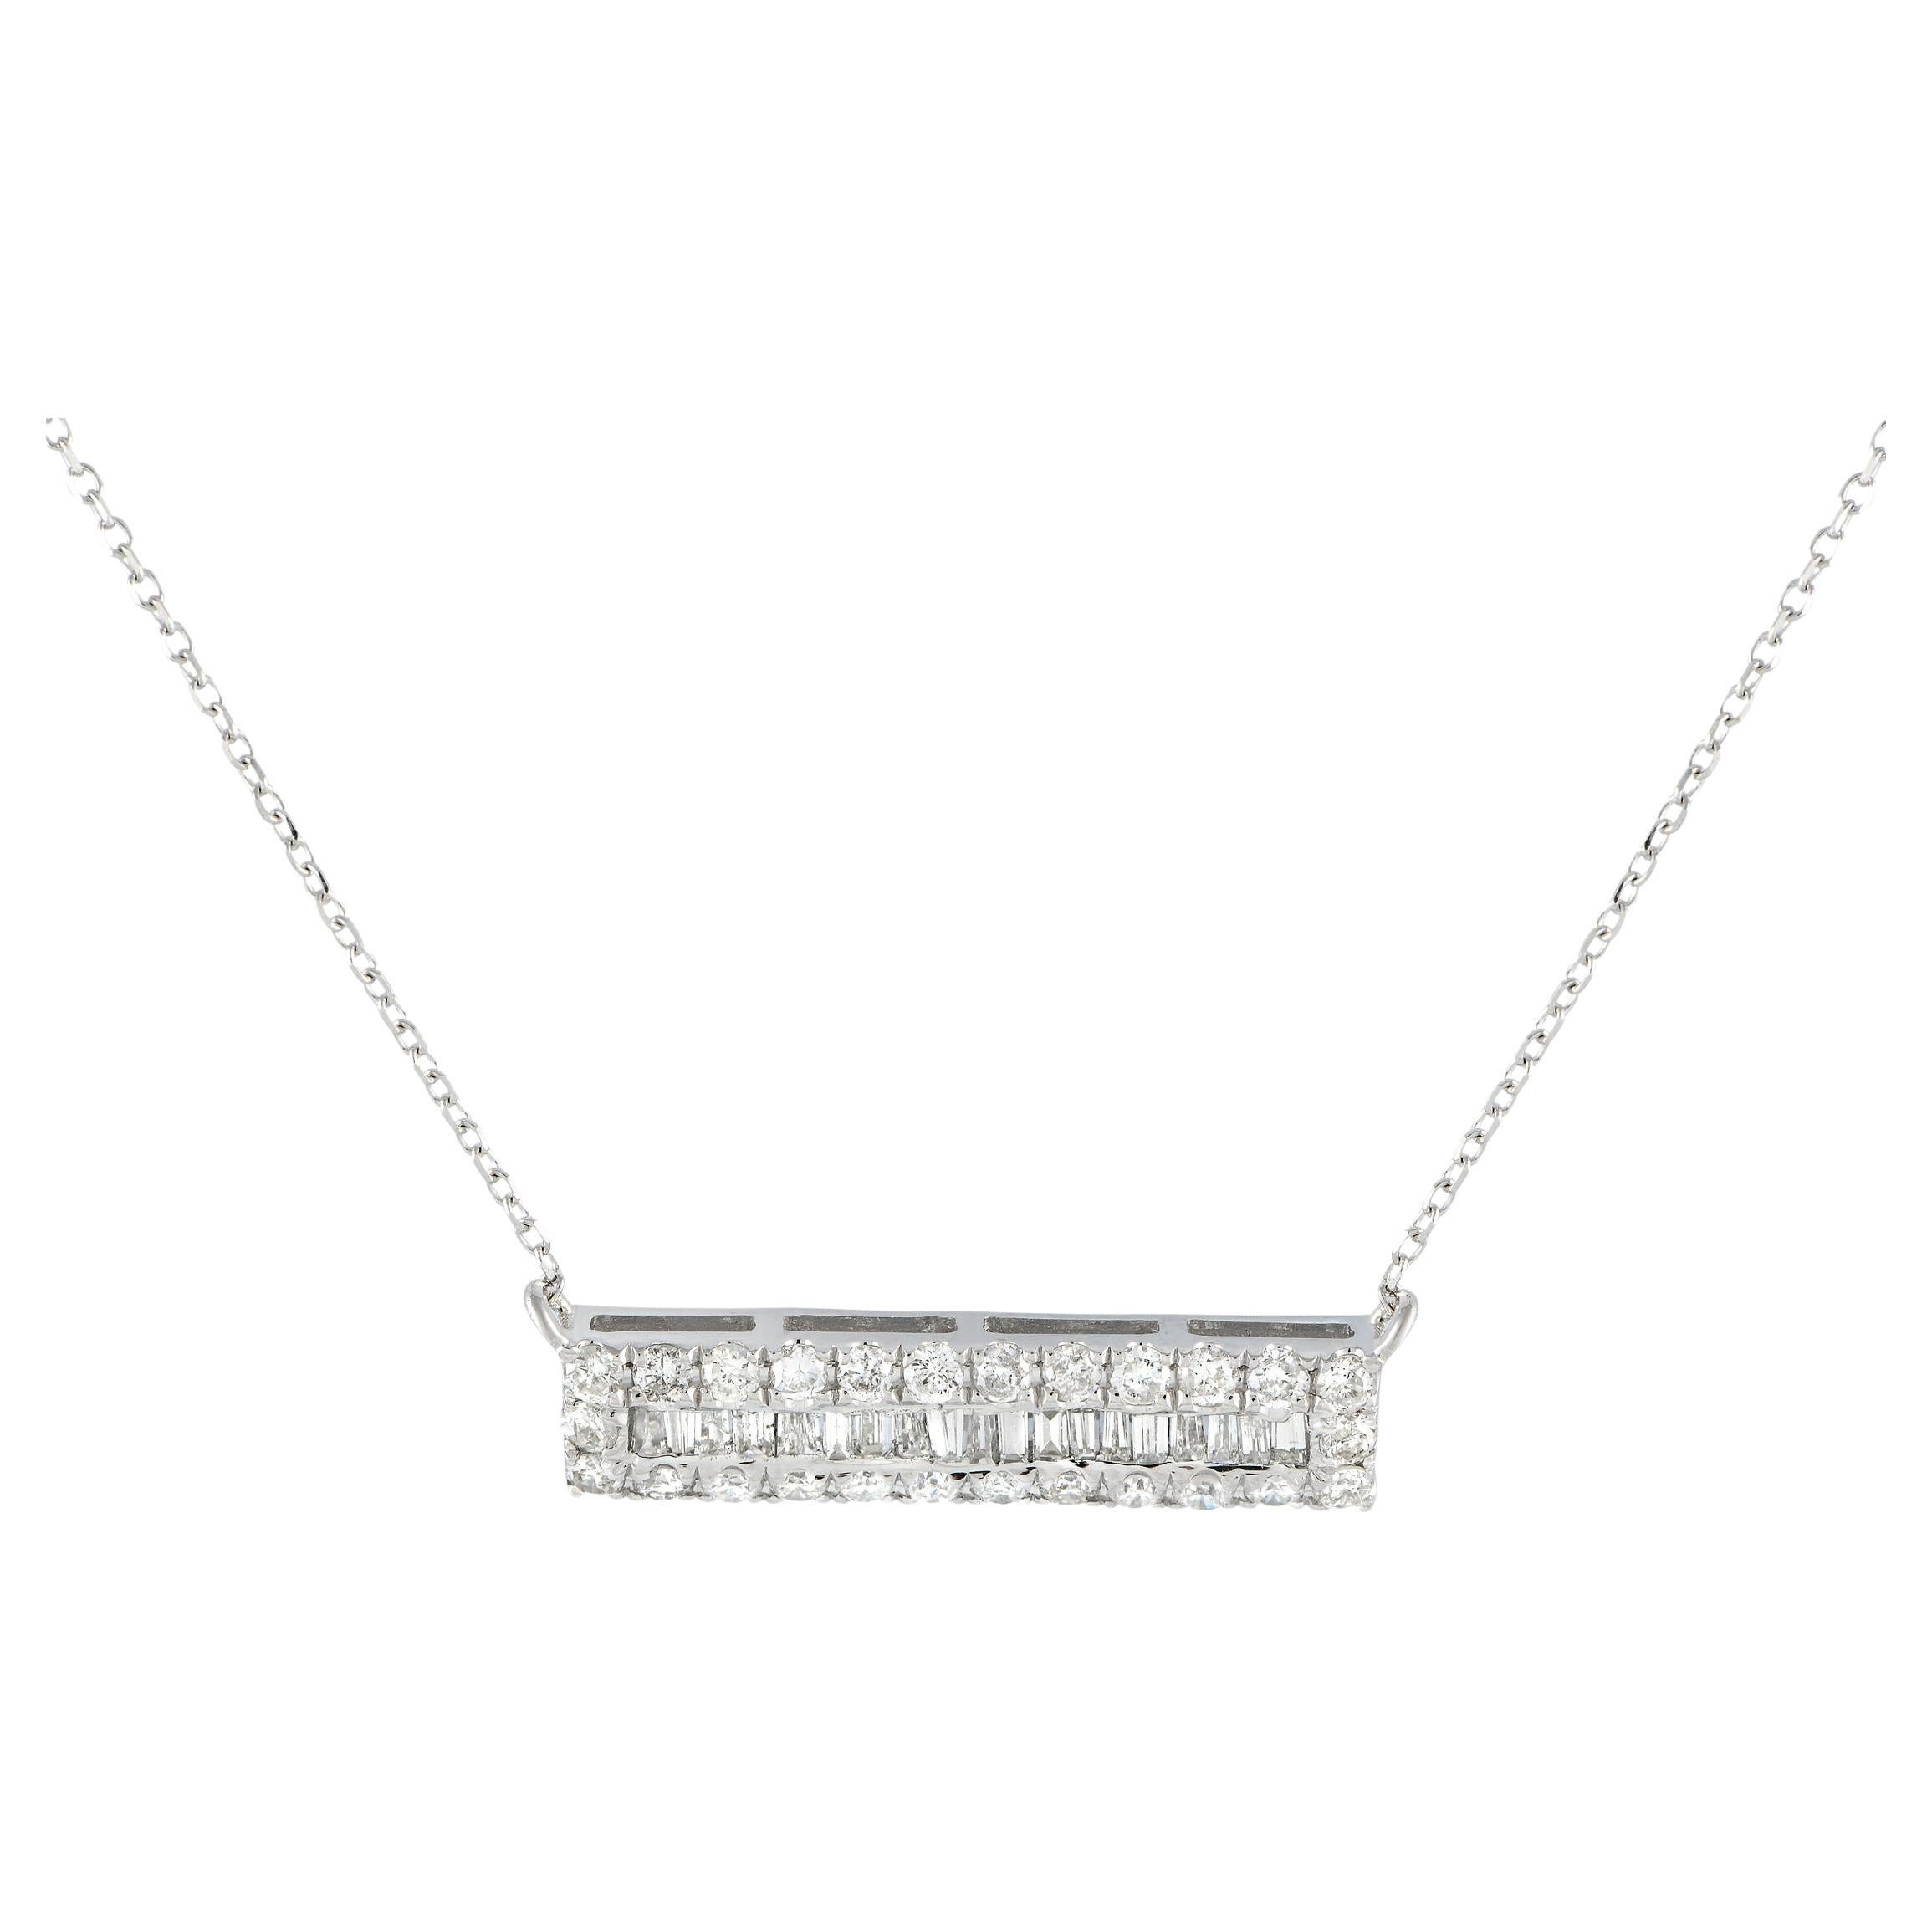 LB Exclusive 14K White Gold 0.80ct Diamond Bar Necklace PN14548